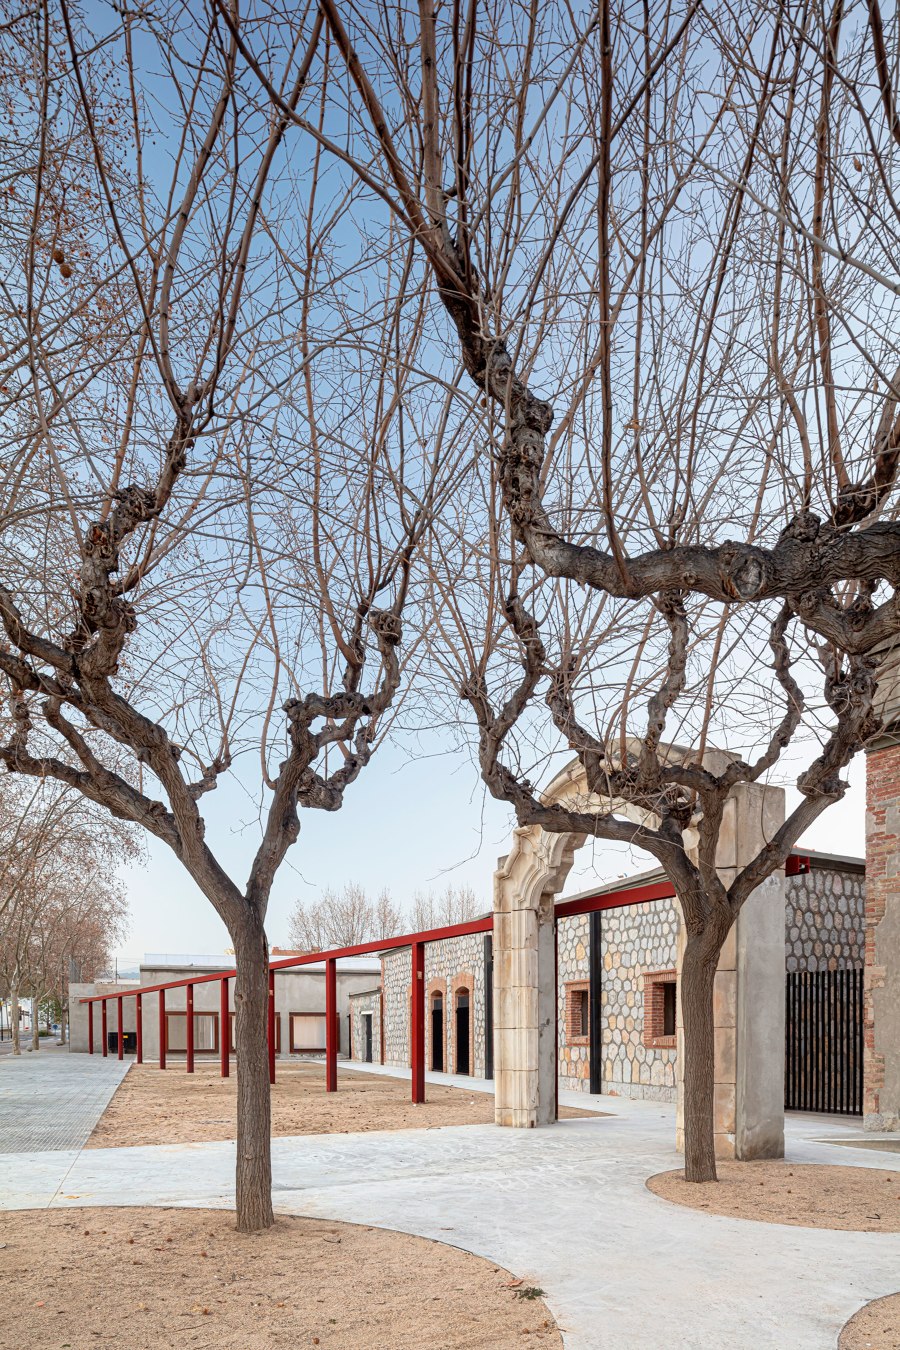 El Roser Social Center by Josep Ferrando Architecture and Gallego Arquitectura | Trade fair & exhibition buildings